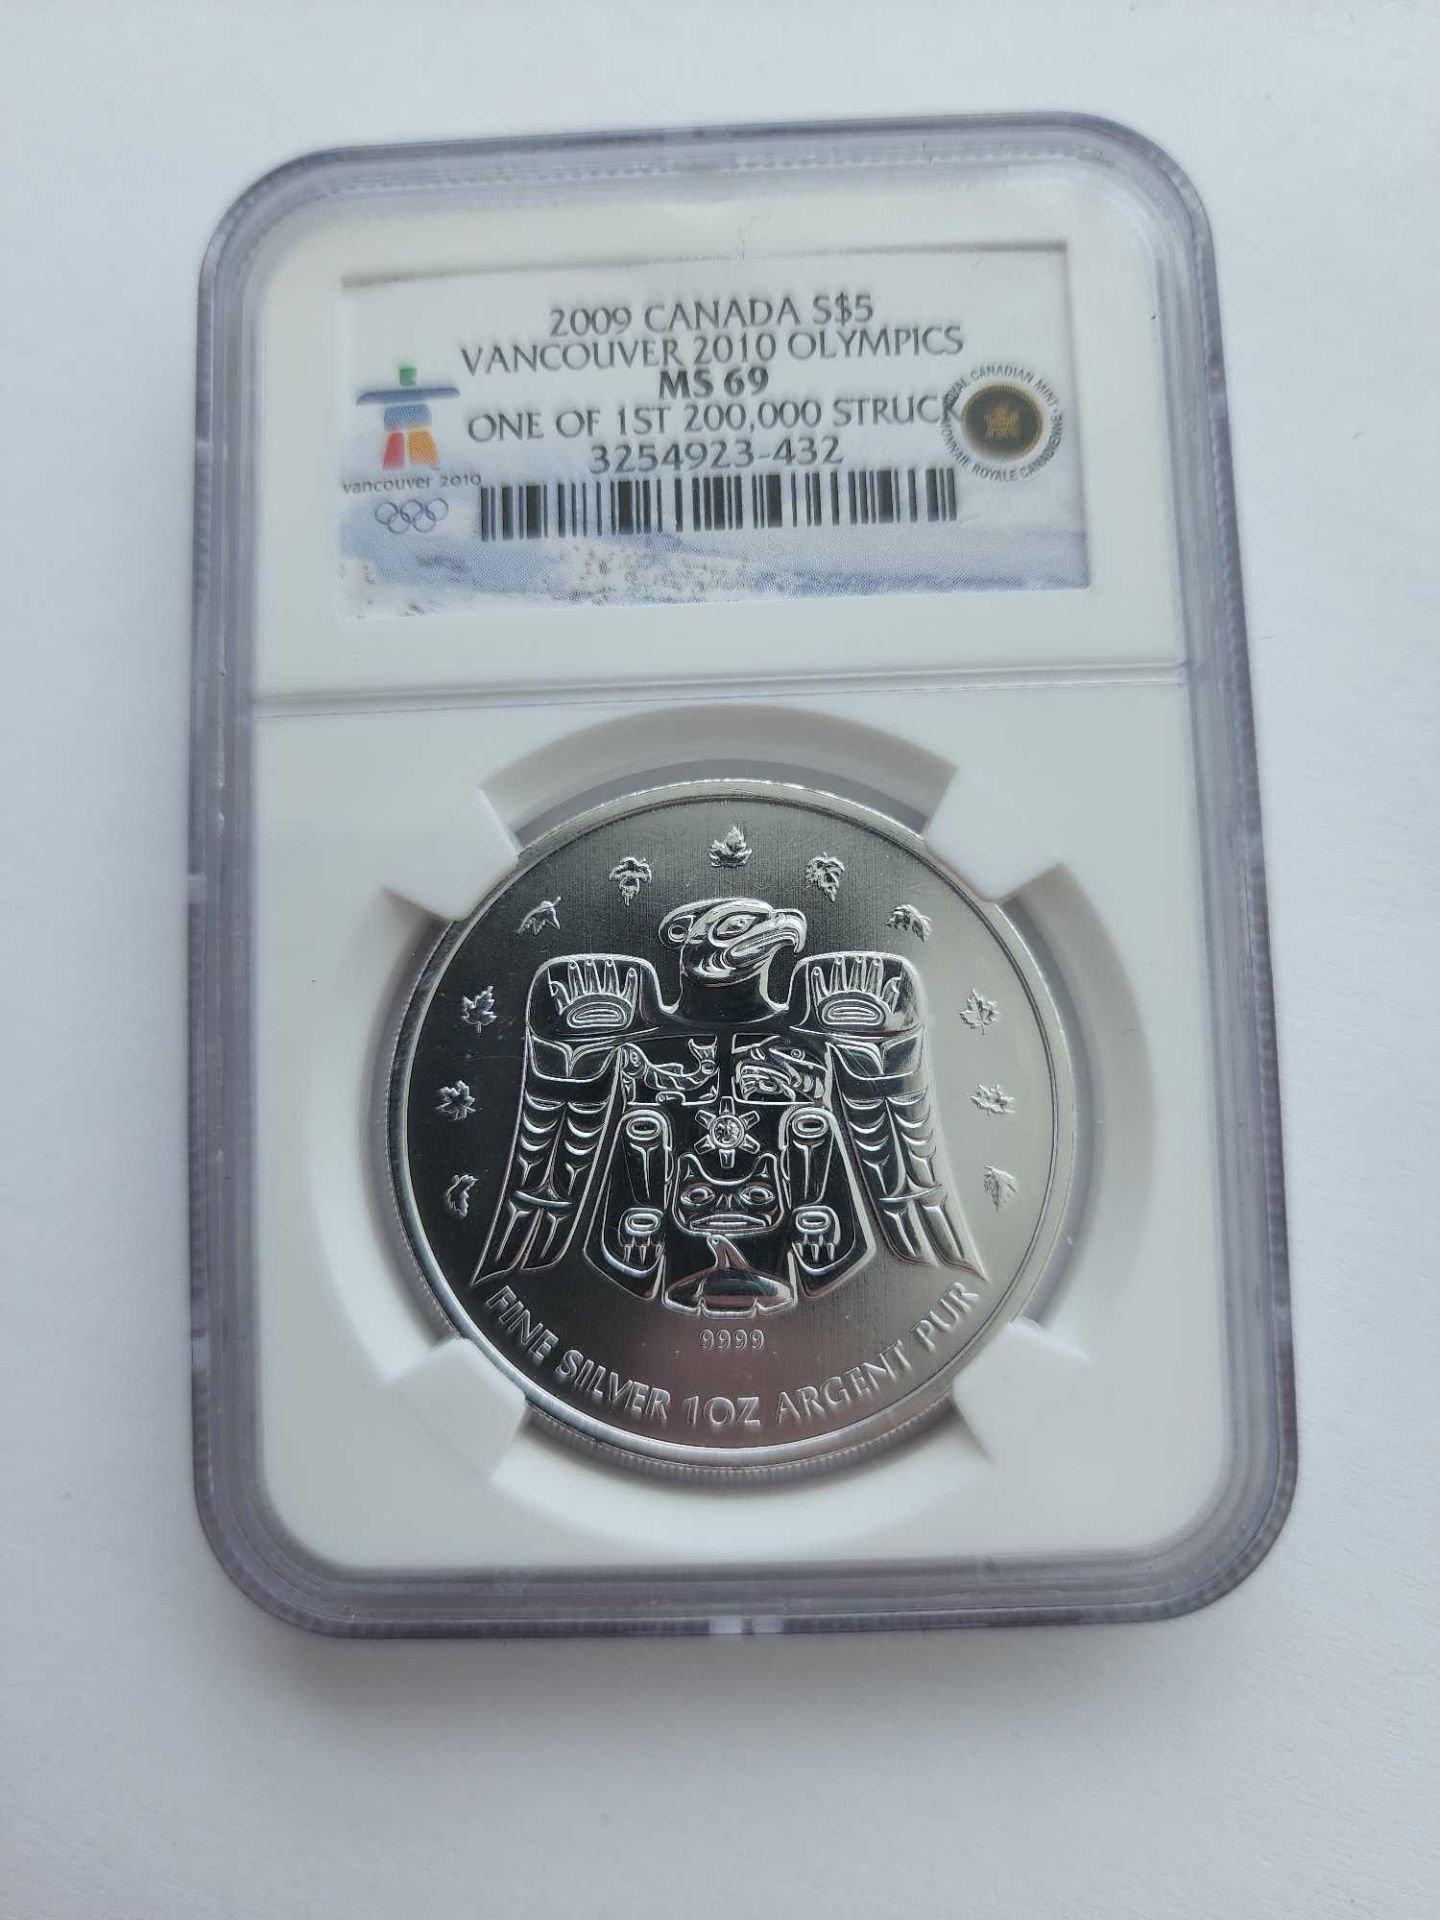 2009 Canada Olympics graded silver coin